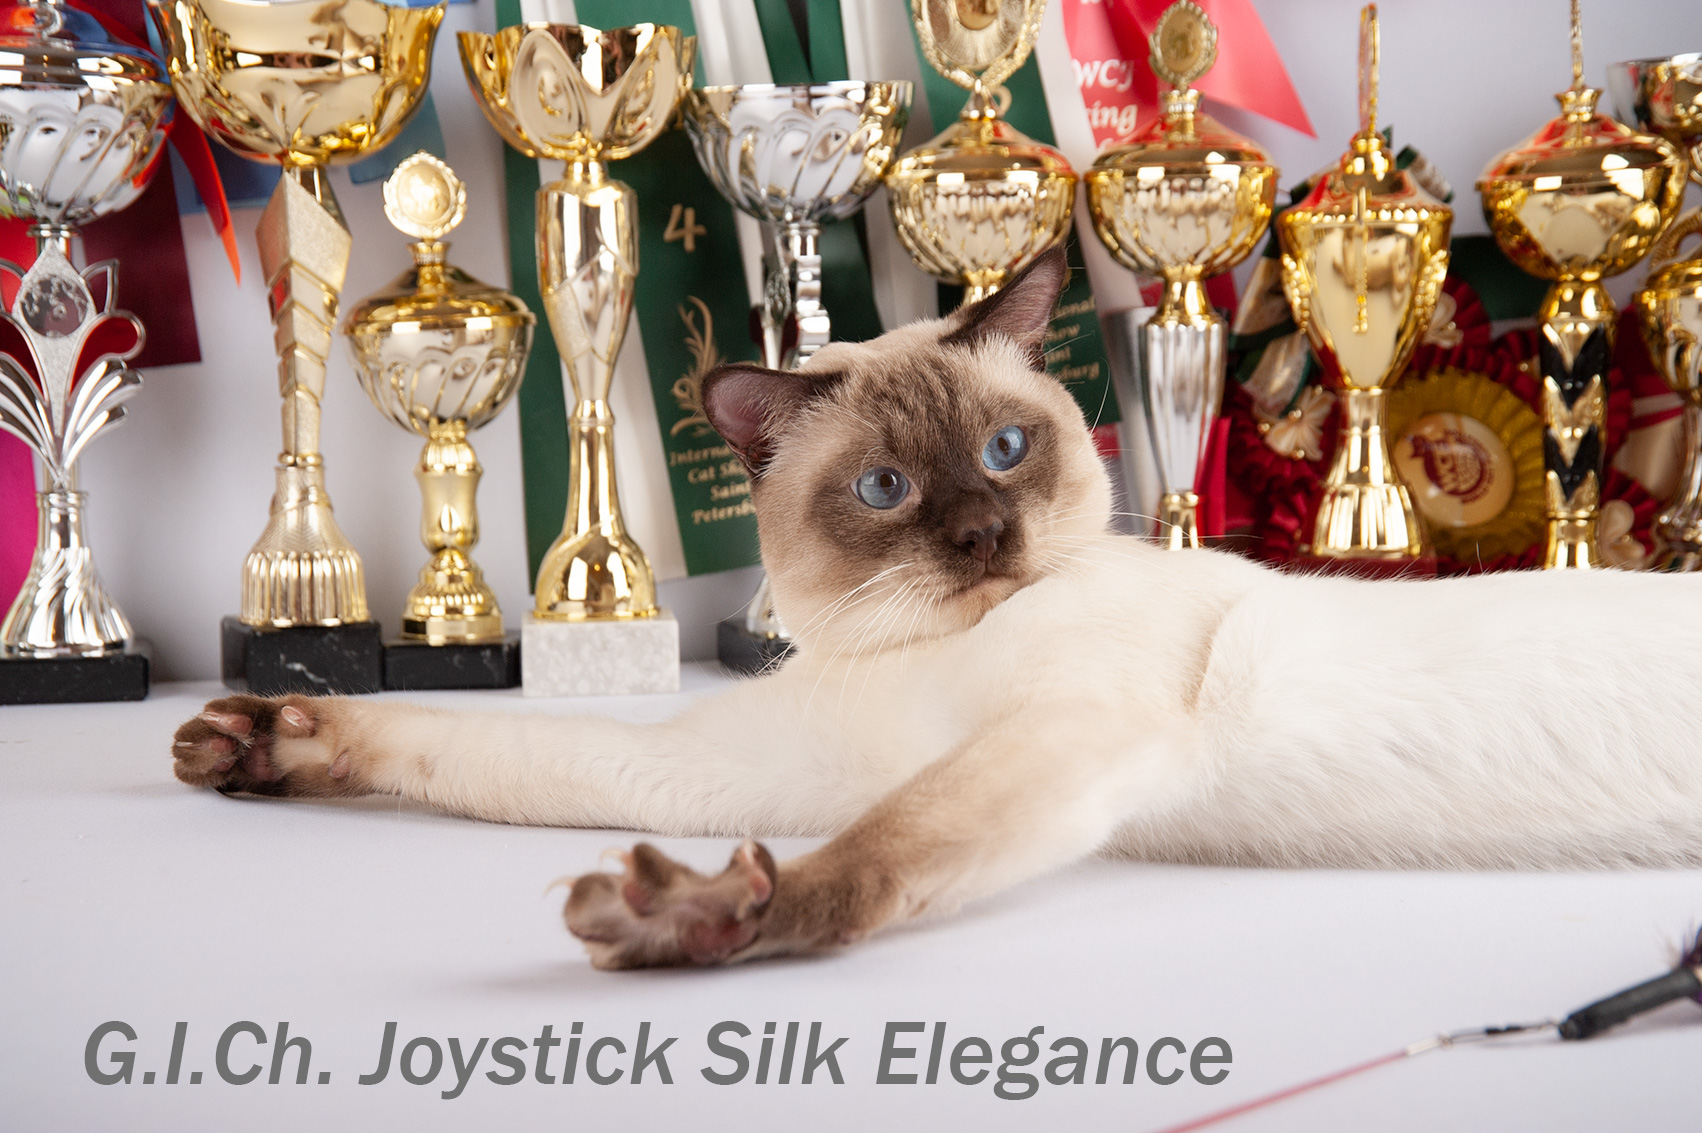 GECH. Joystick Silk Elegance